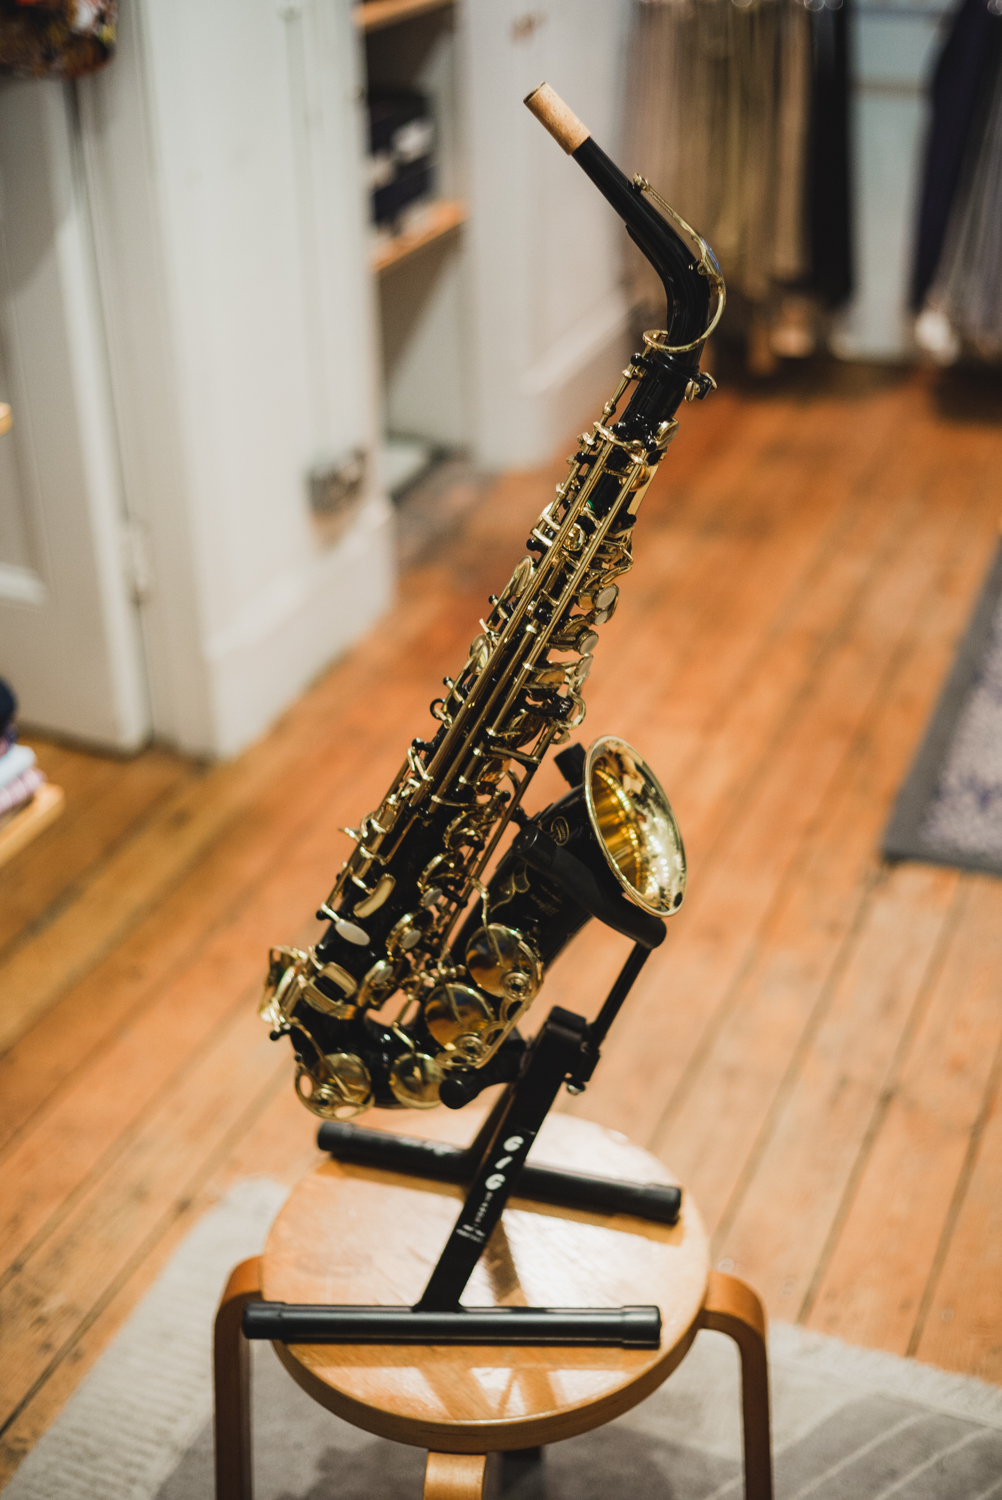 Beyond Hep: A Conversation With Saxophonist Thomas Kleyn of Howarth of London